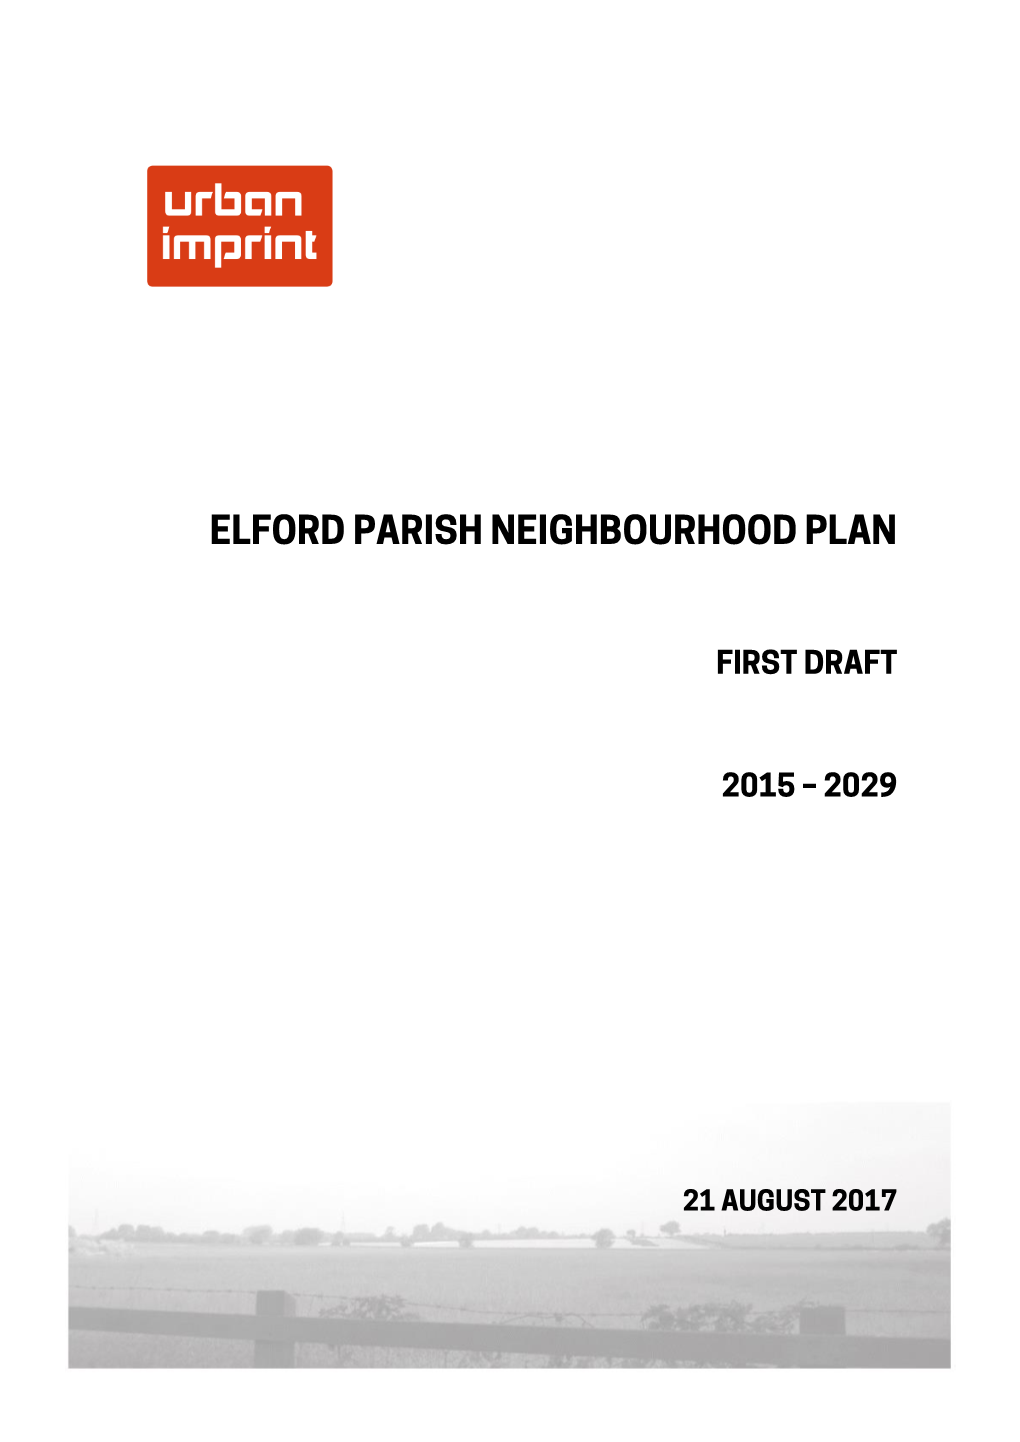 Elford Parish Neighbourhood Plan